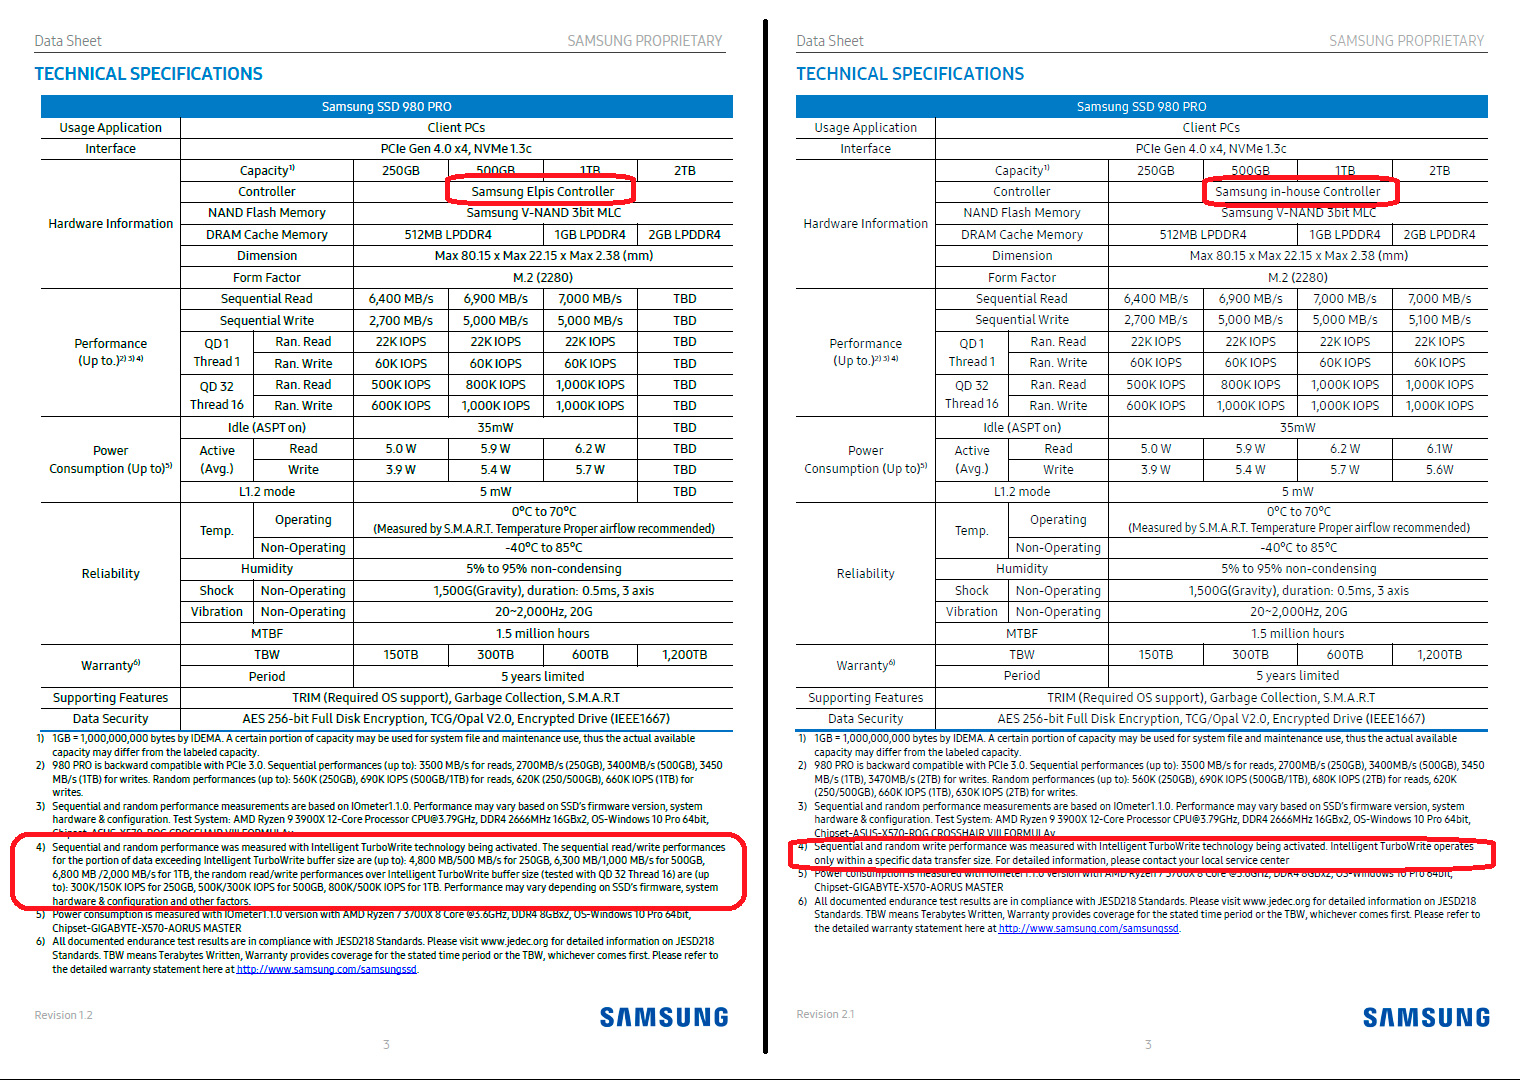 Samsung дала комментарии про смену аппаратной платформы SSD 970 EVO Plus. 980 Pro на очереди?